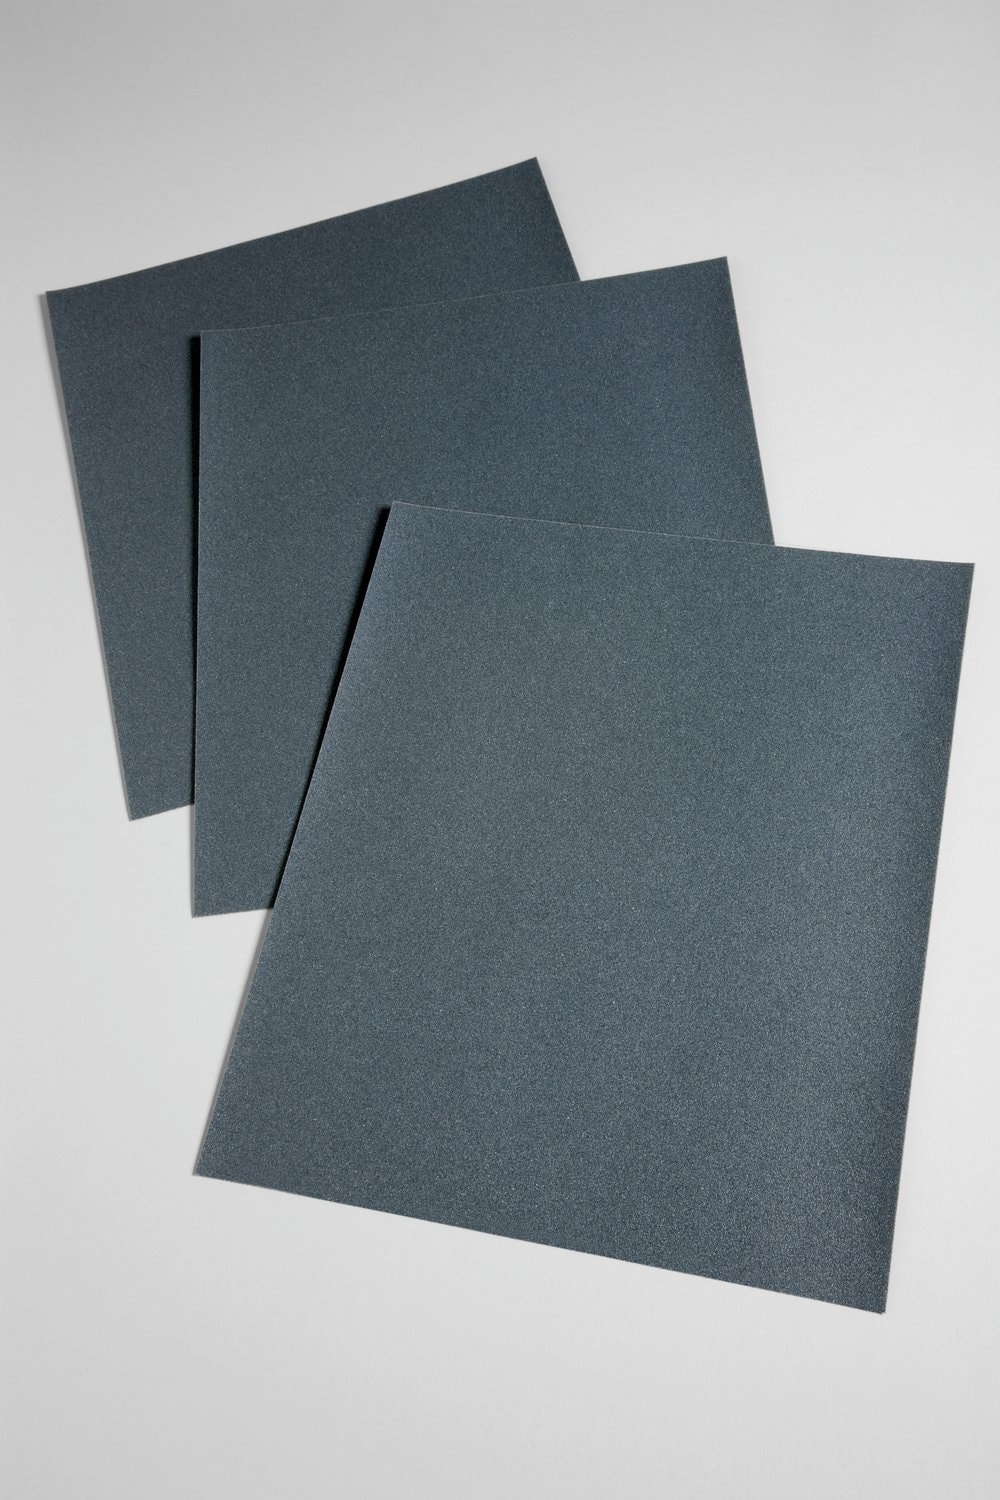 7100014900 - 3M Wetordry Paper Sheet 431Q, 600 C-weight, Config